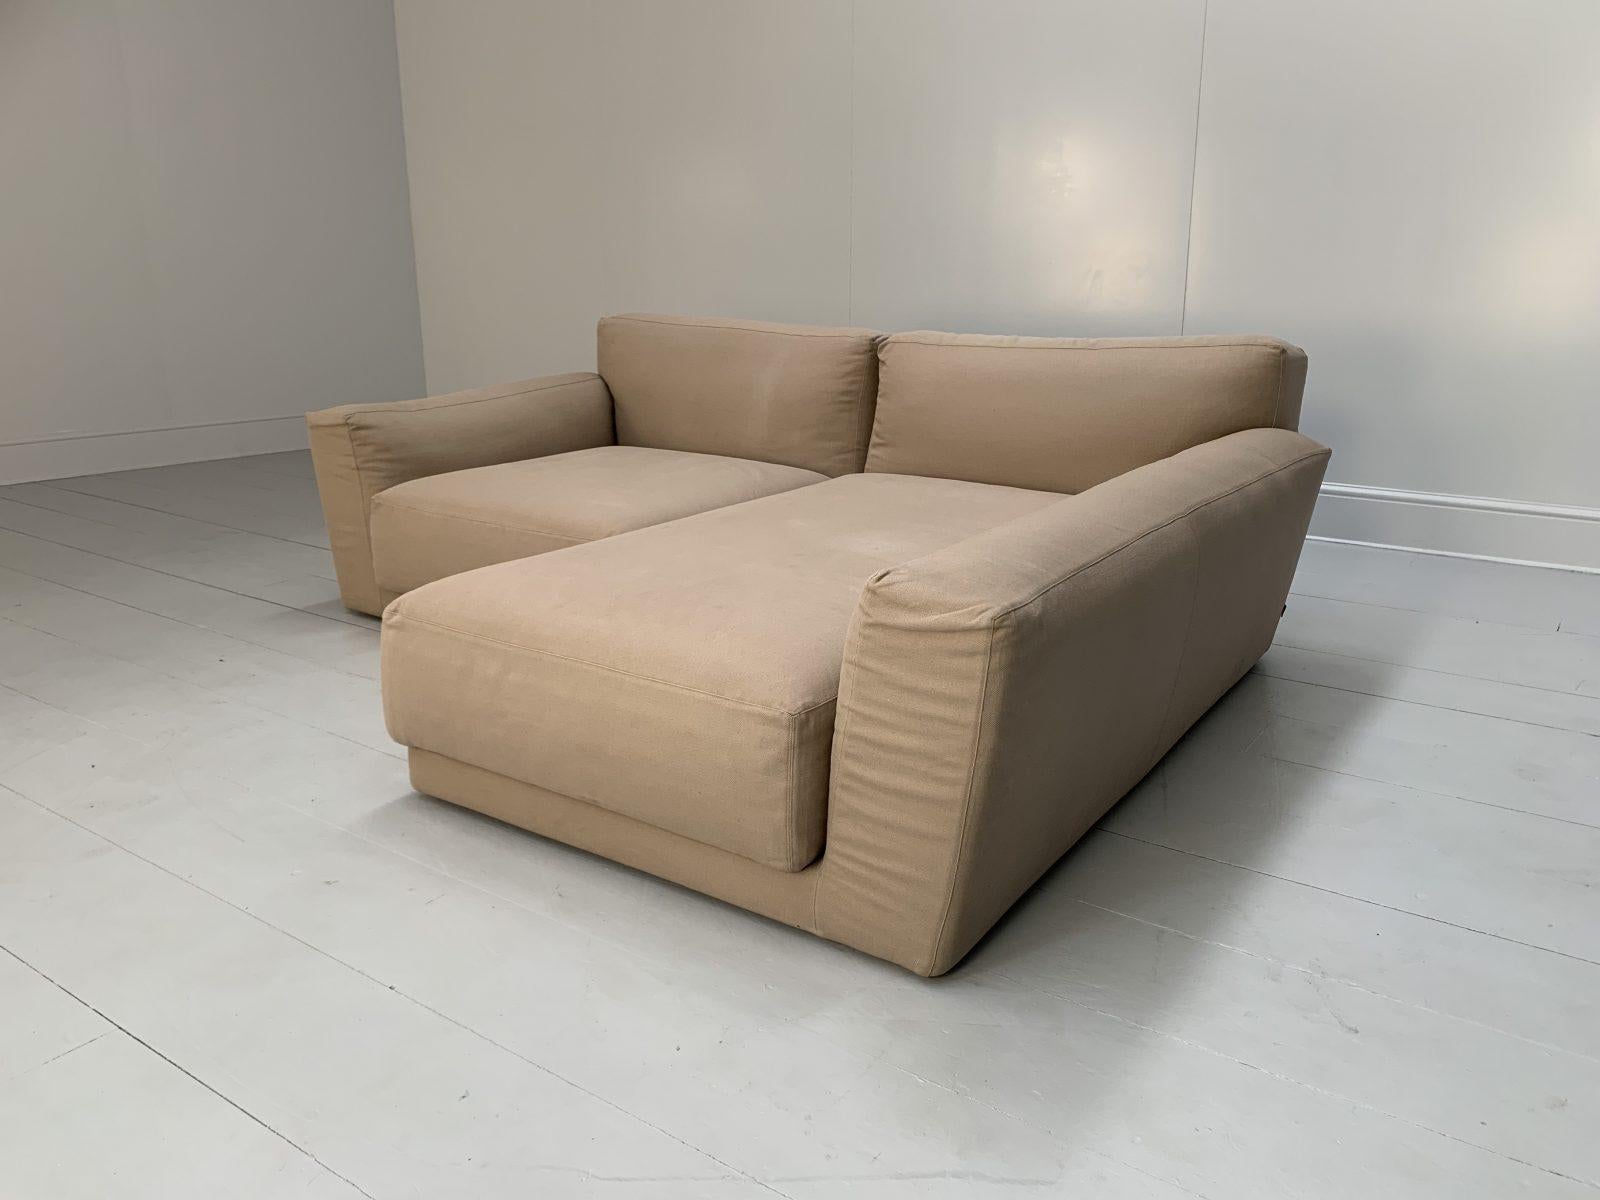 B&B Italia “Luis” 3-Seat Compact L-Shape Sofa – In “Ellade” Linen For Sale 3